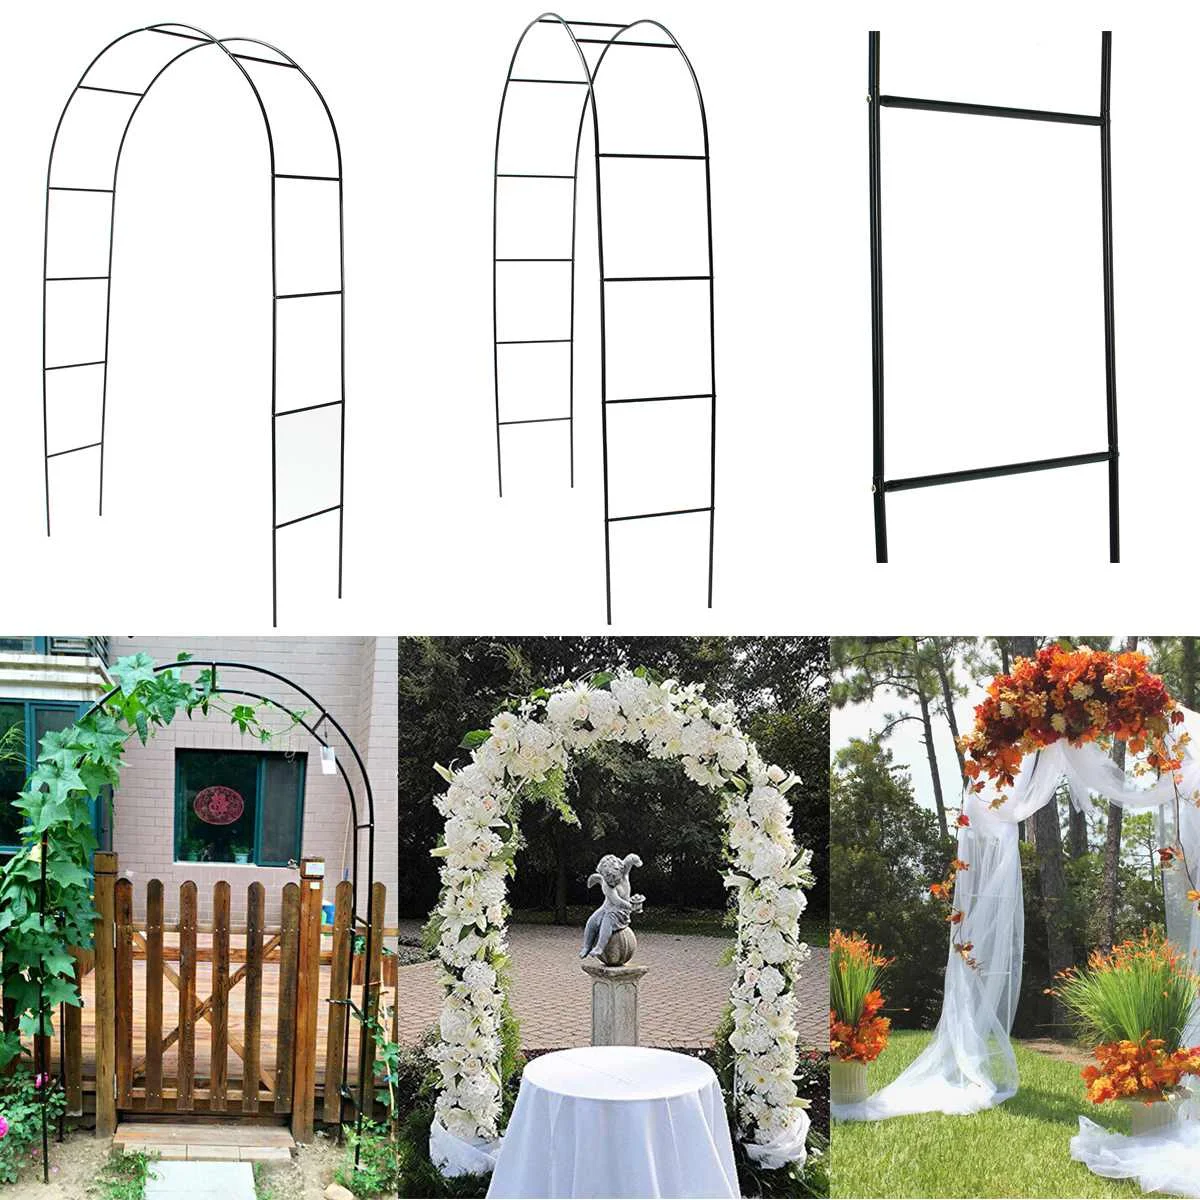 DIY Wedding Arch Decorative Garden Backdrop Pergola Stand Flower Frame Metal Wedding Arch Climbing Plant Support Trellis Arch